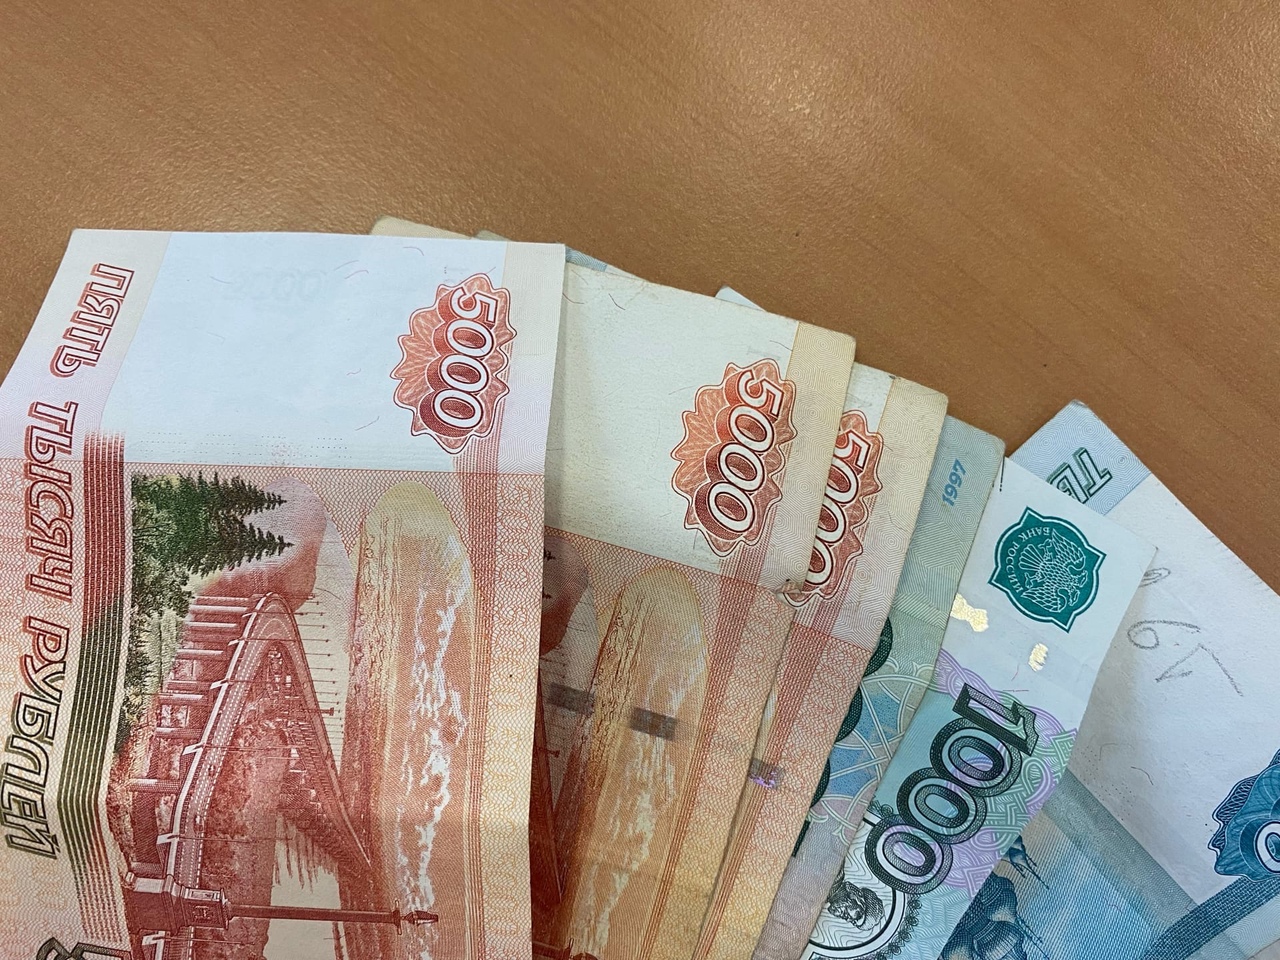 В Самаре экс-руководителя техникума подозревают в мошенничестве на 2 миллиона рублей